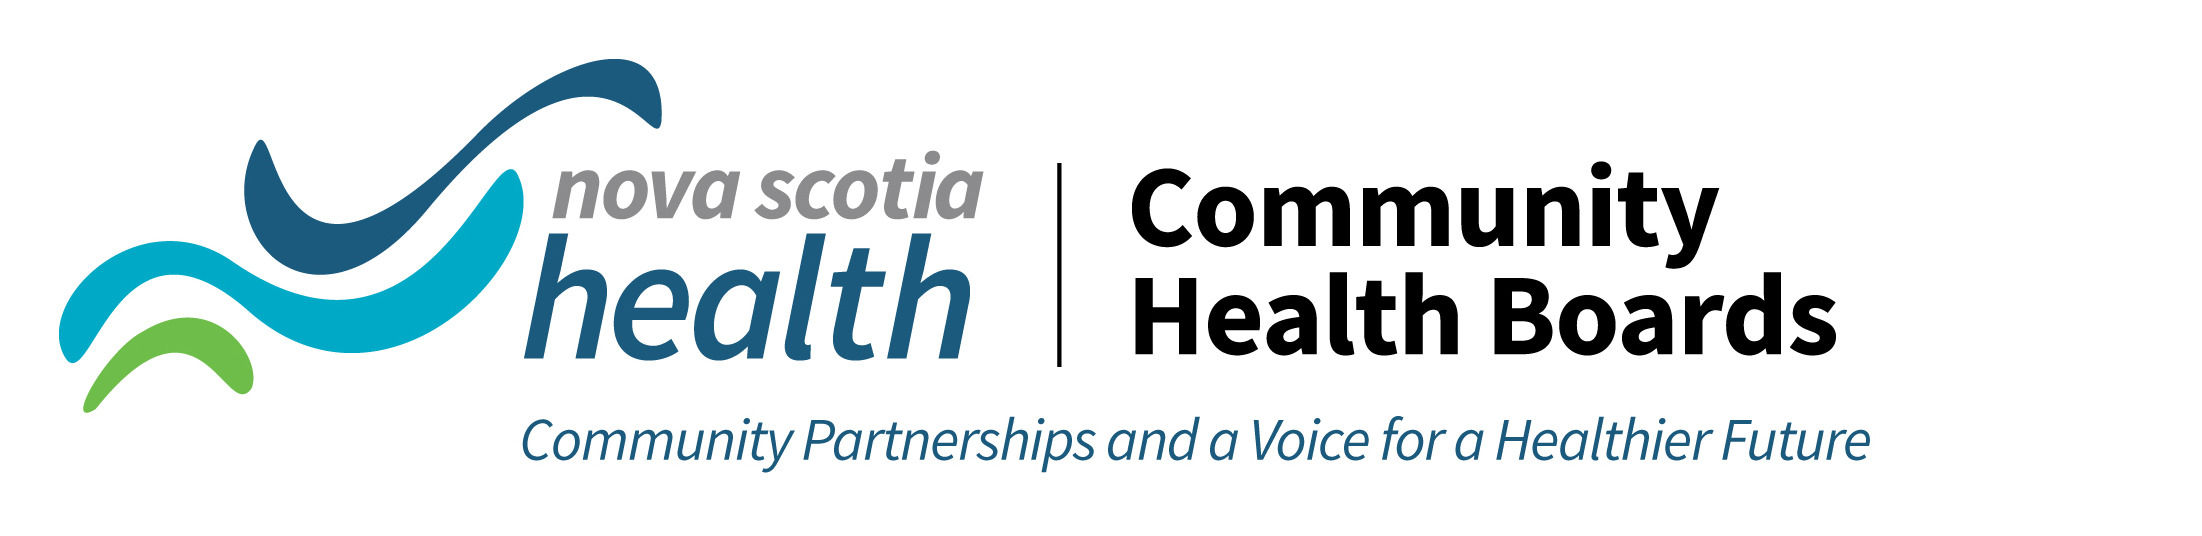 Community Health Board Wellness Funds logo